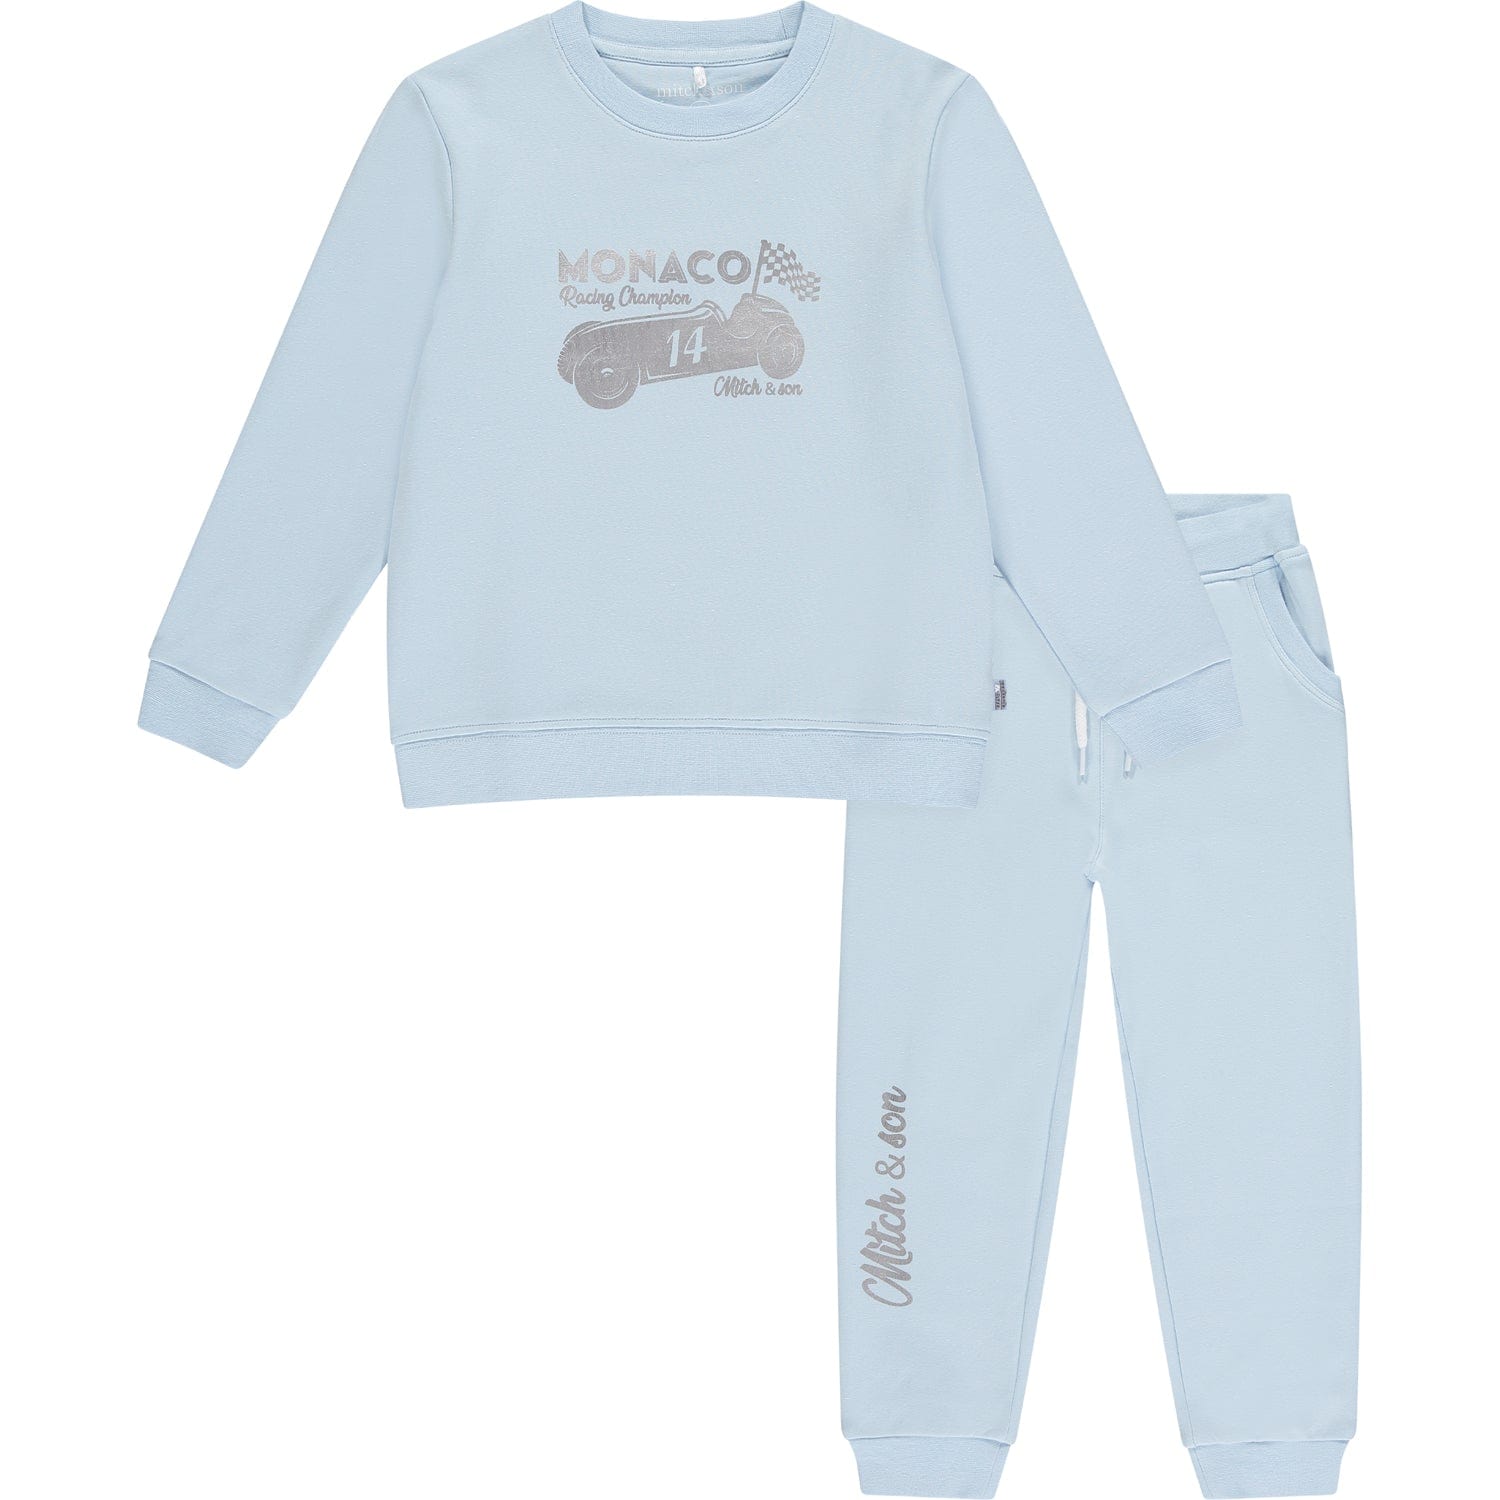 MITCH & SON - Elton Car Graphic Sweatshirt Set - Pale Blue